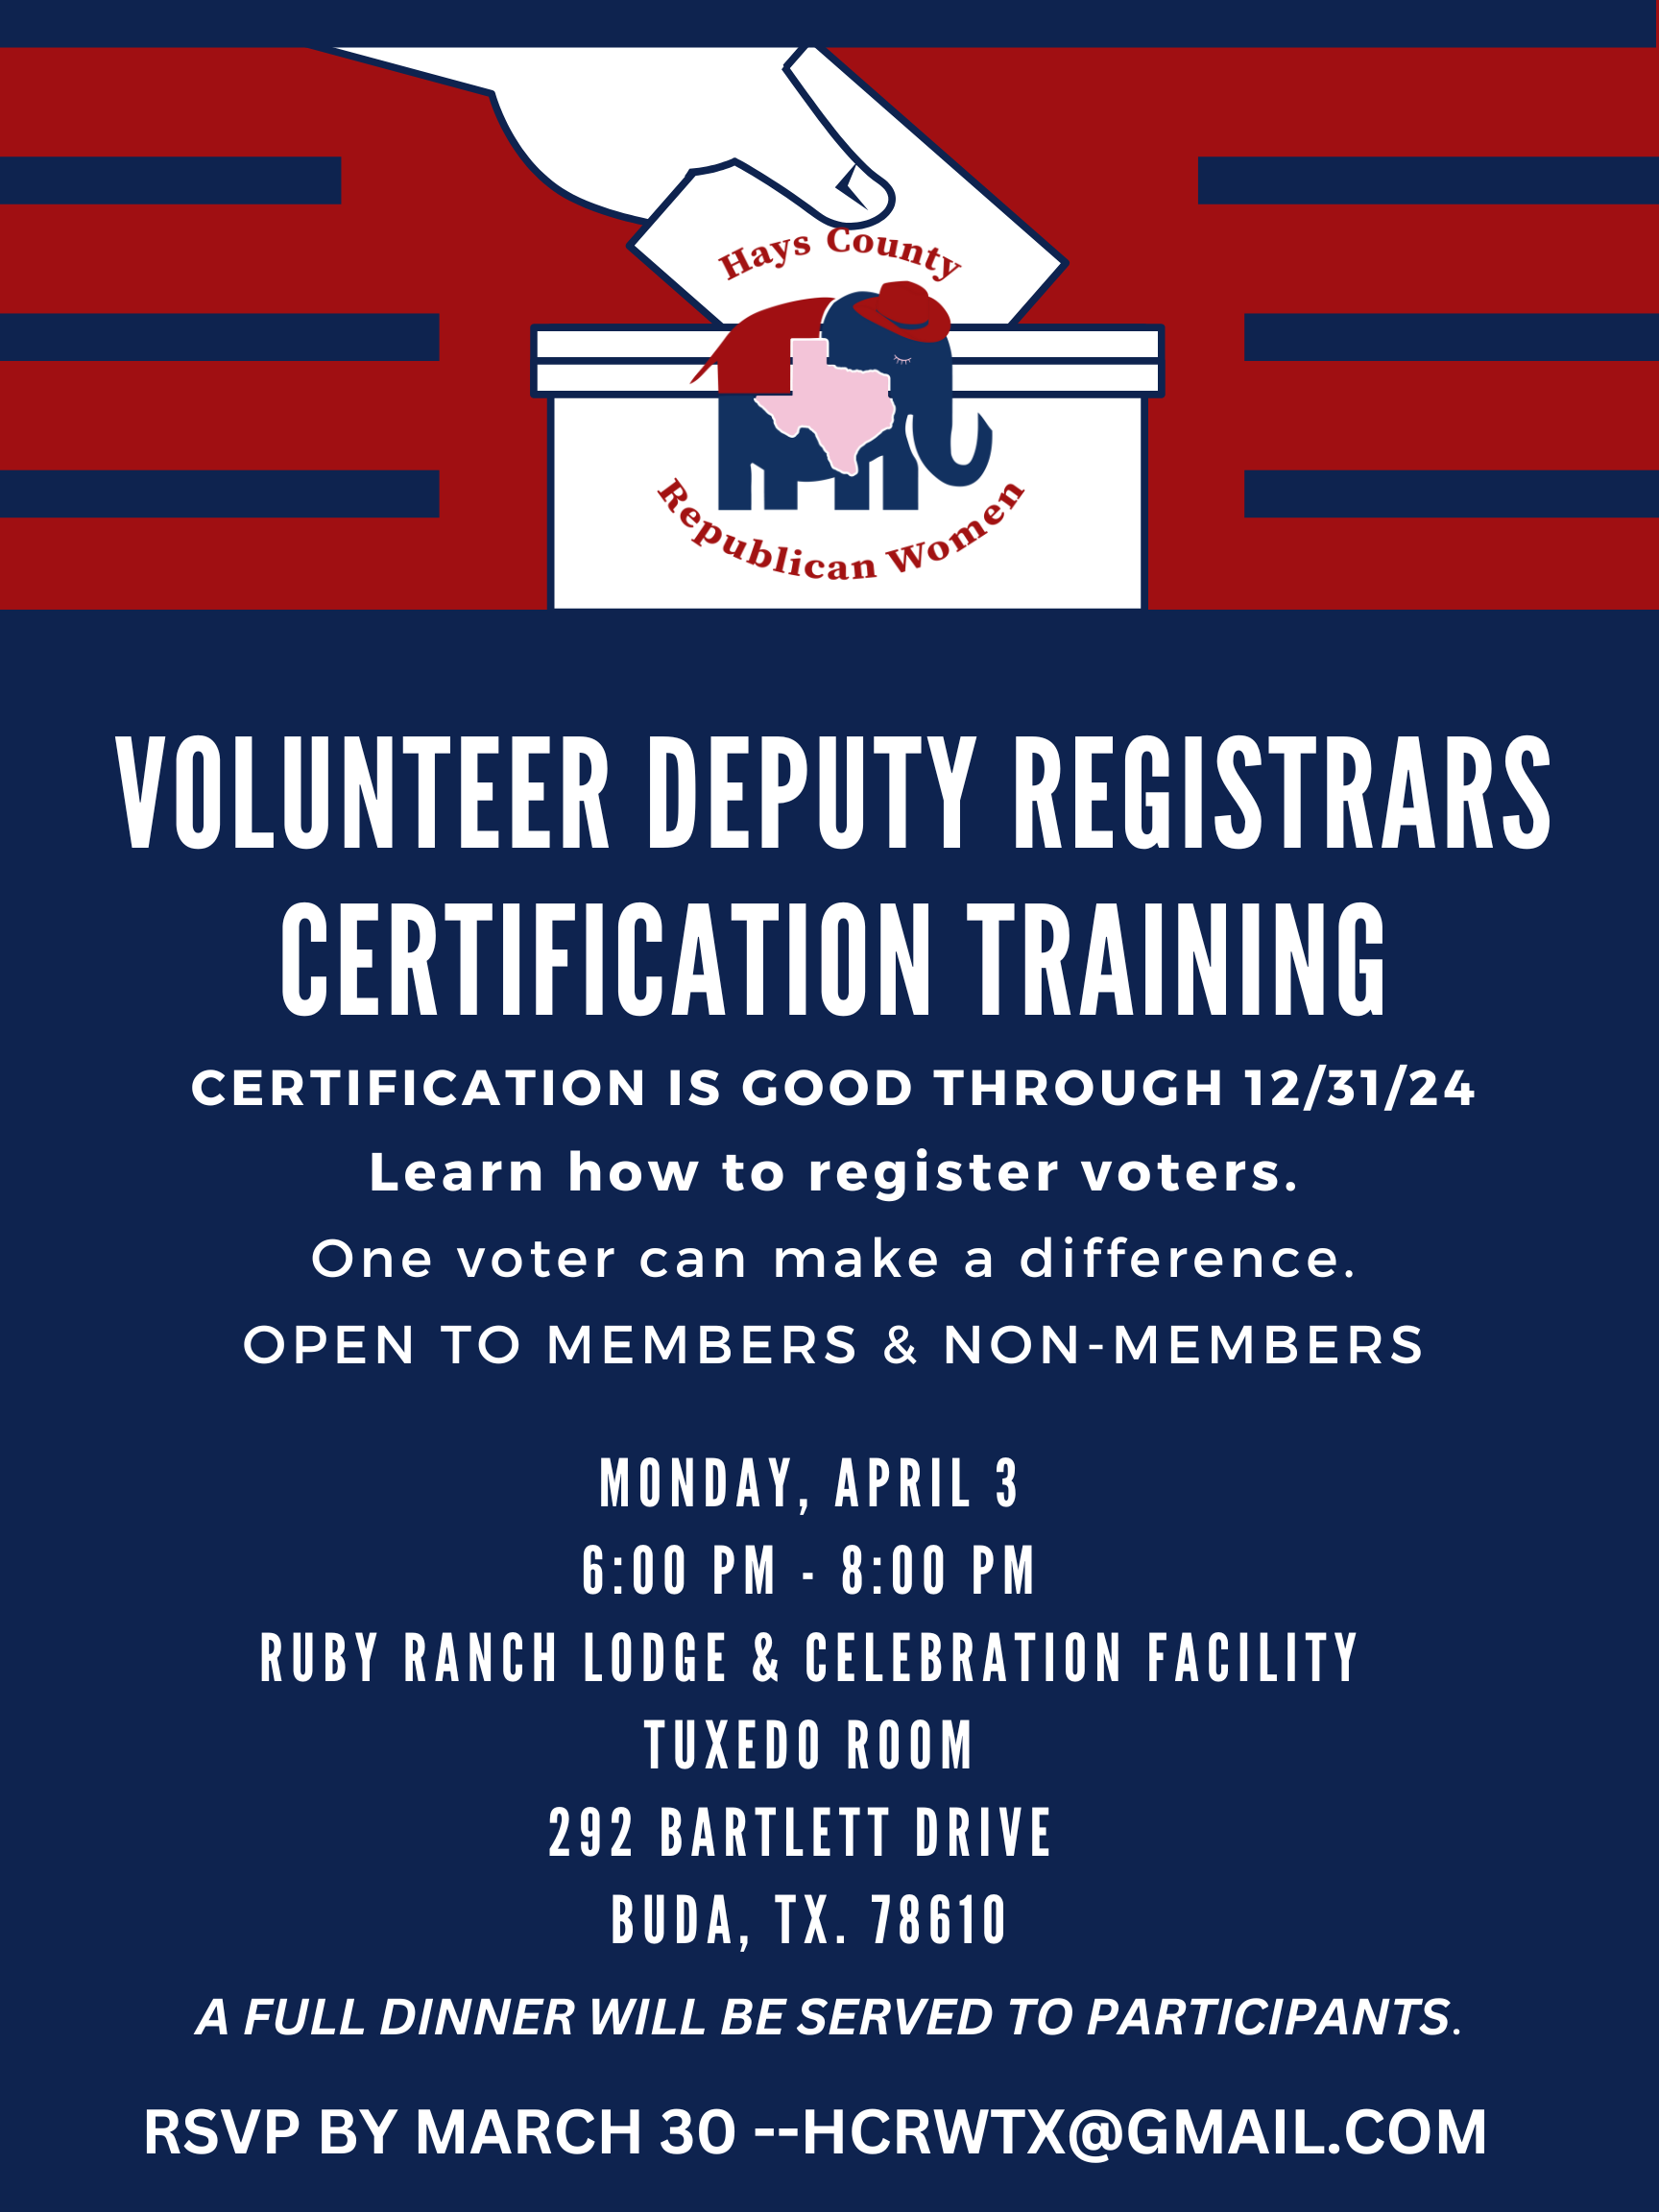 HCRW: Volunteer Deputy Registrars (VDR) Certification Training @ Ruby Ranch Lodge & Celebratiion Facility, Tuxedo Room